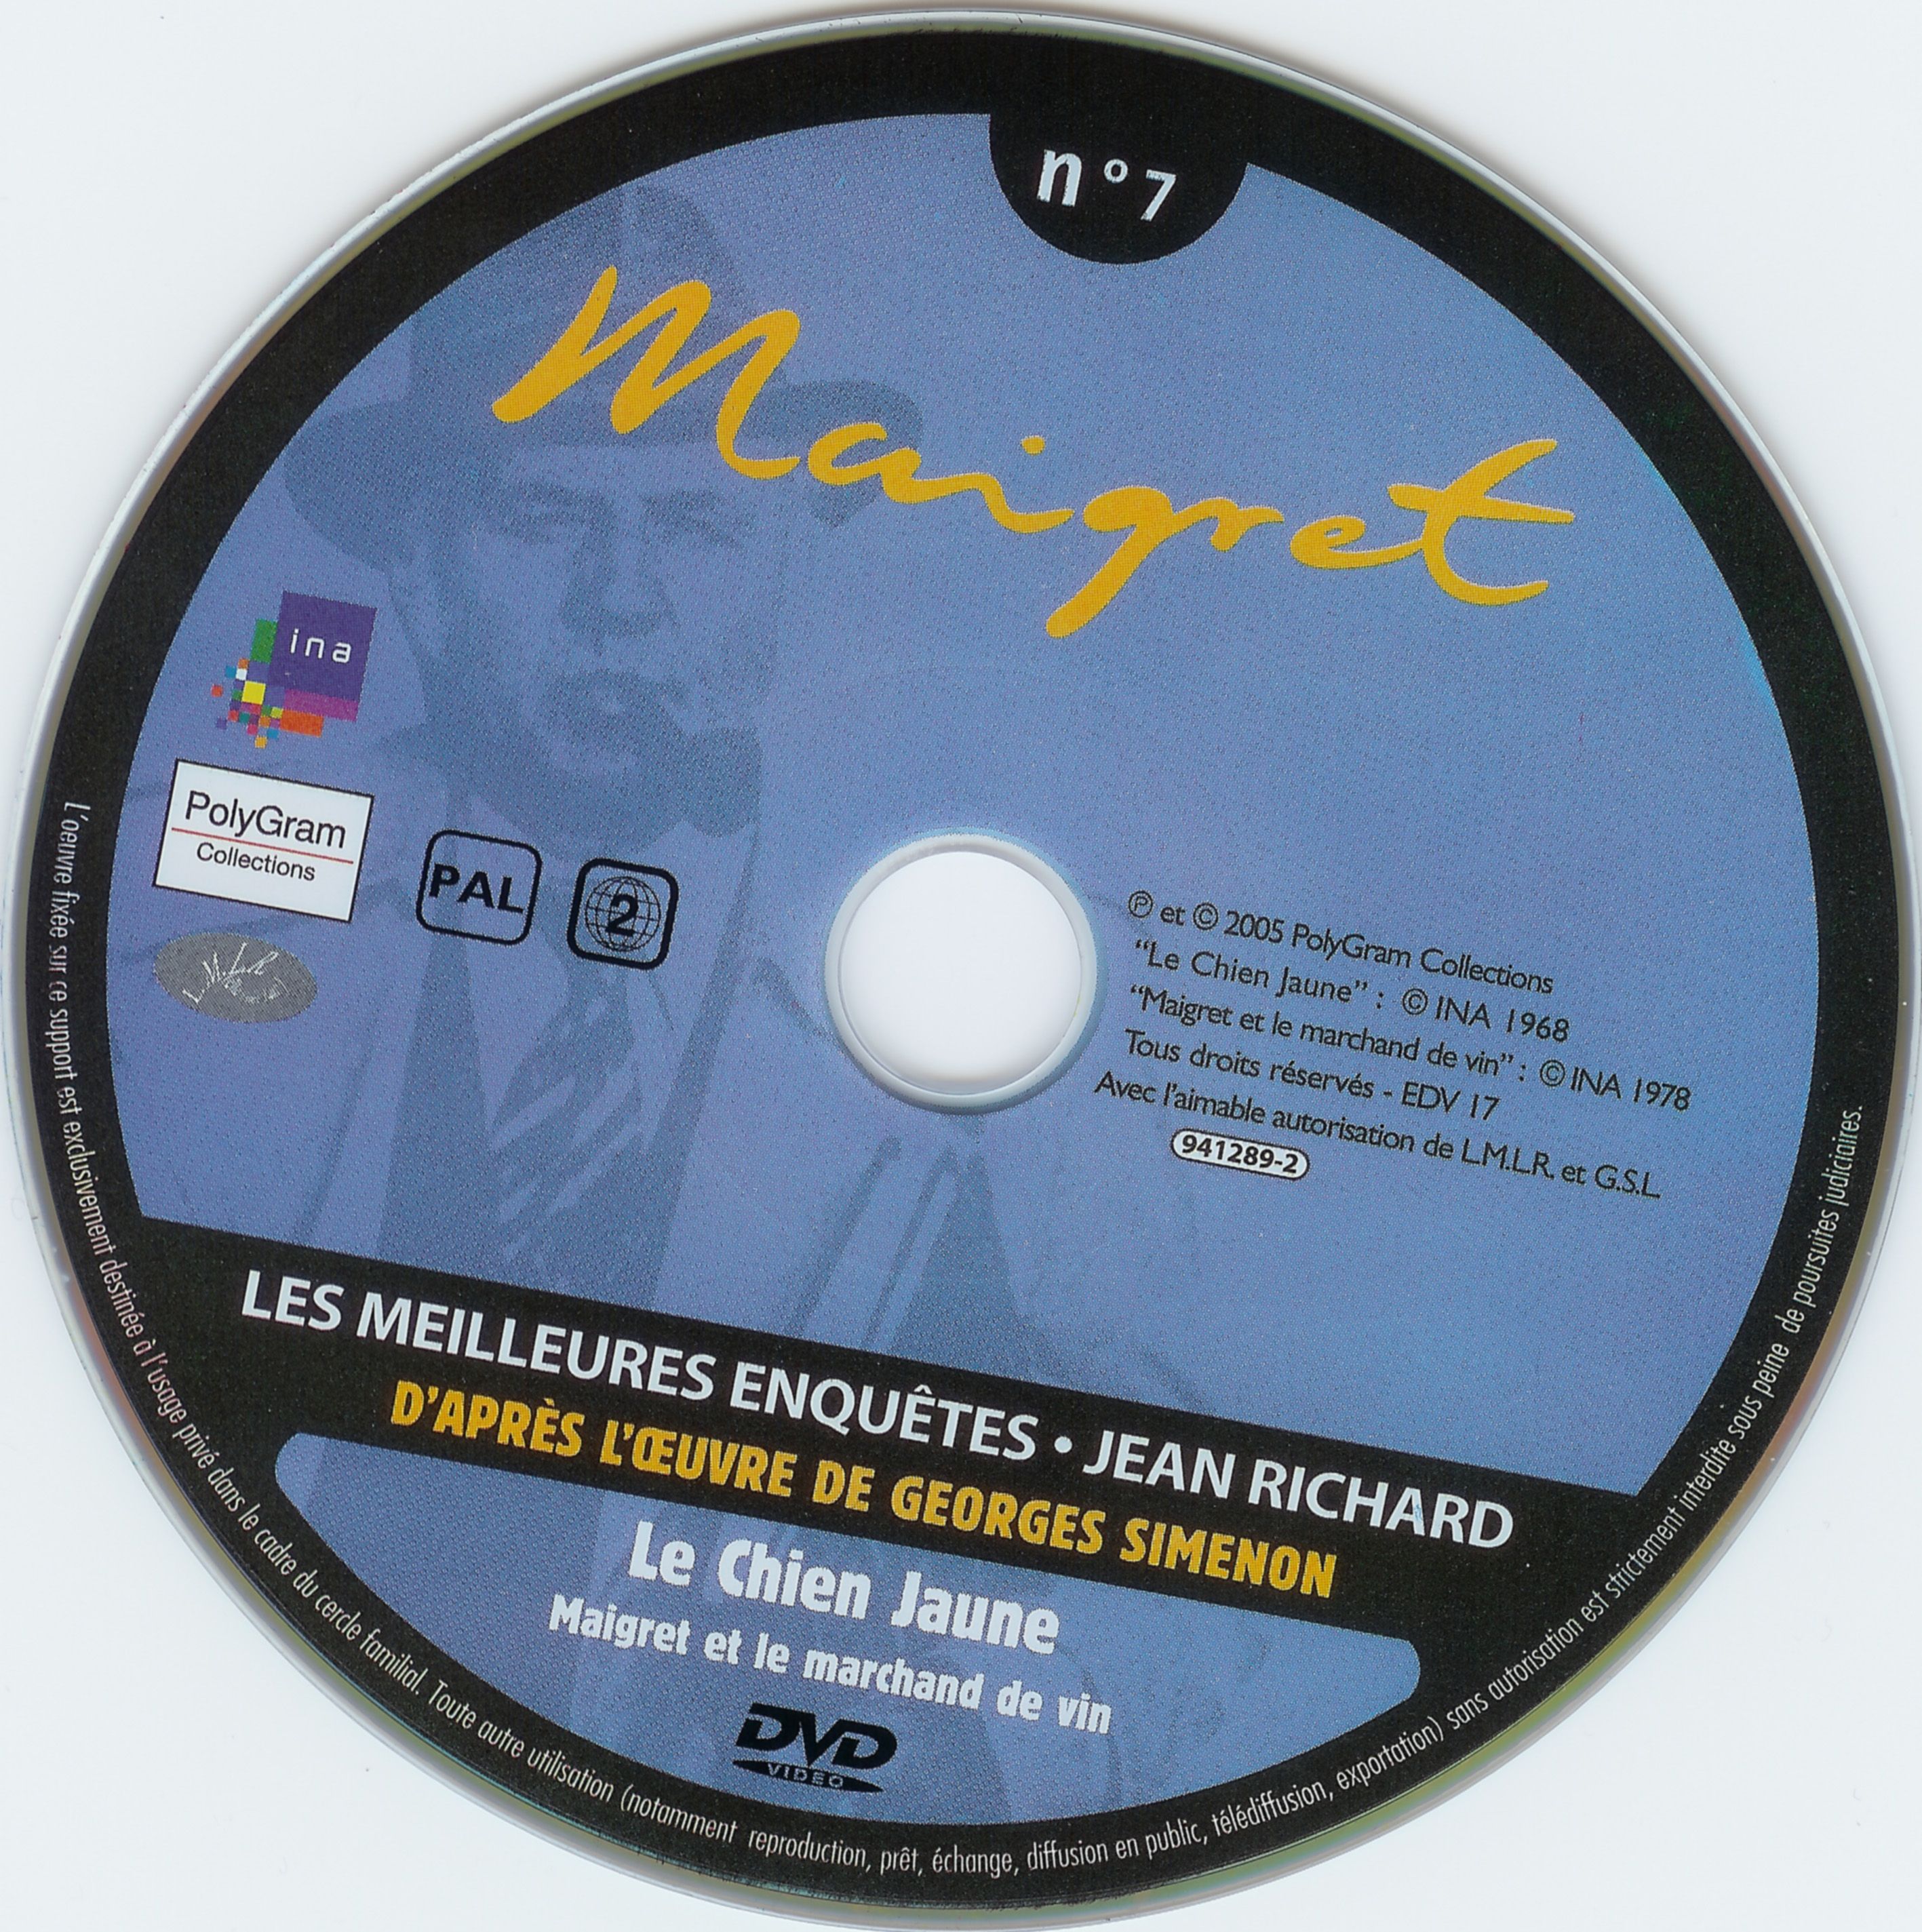 Maigret (Jean Richard) vol 07